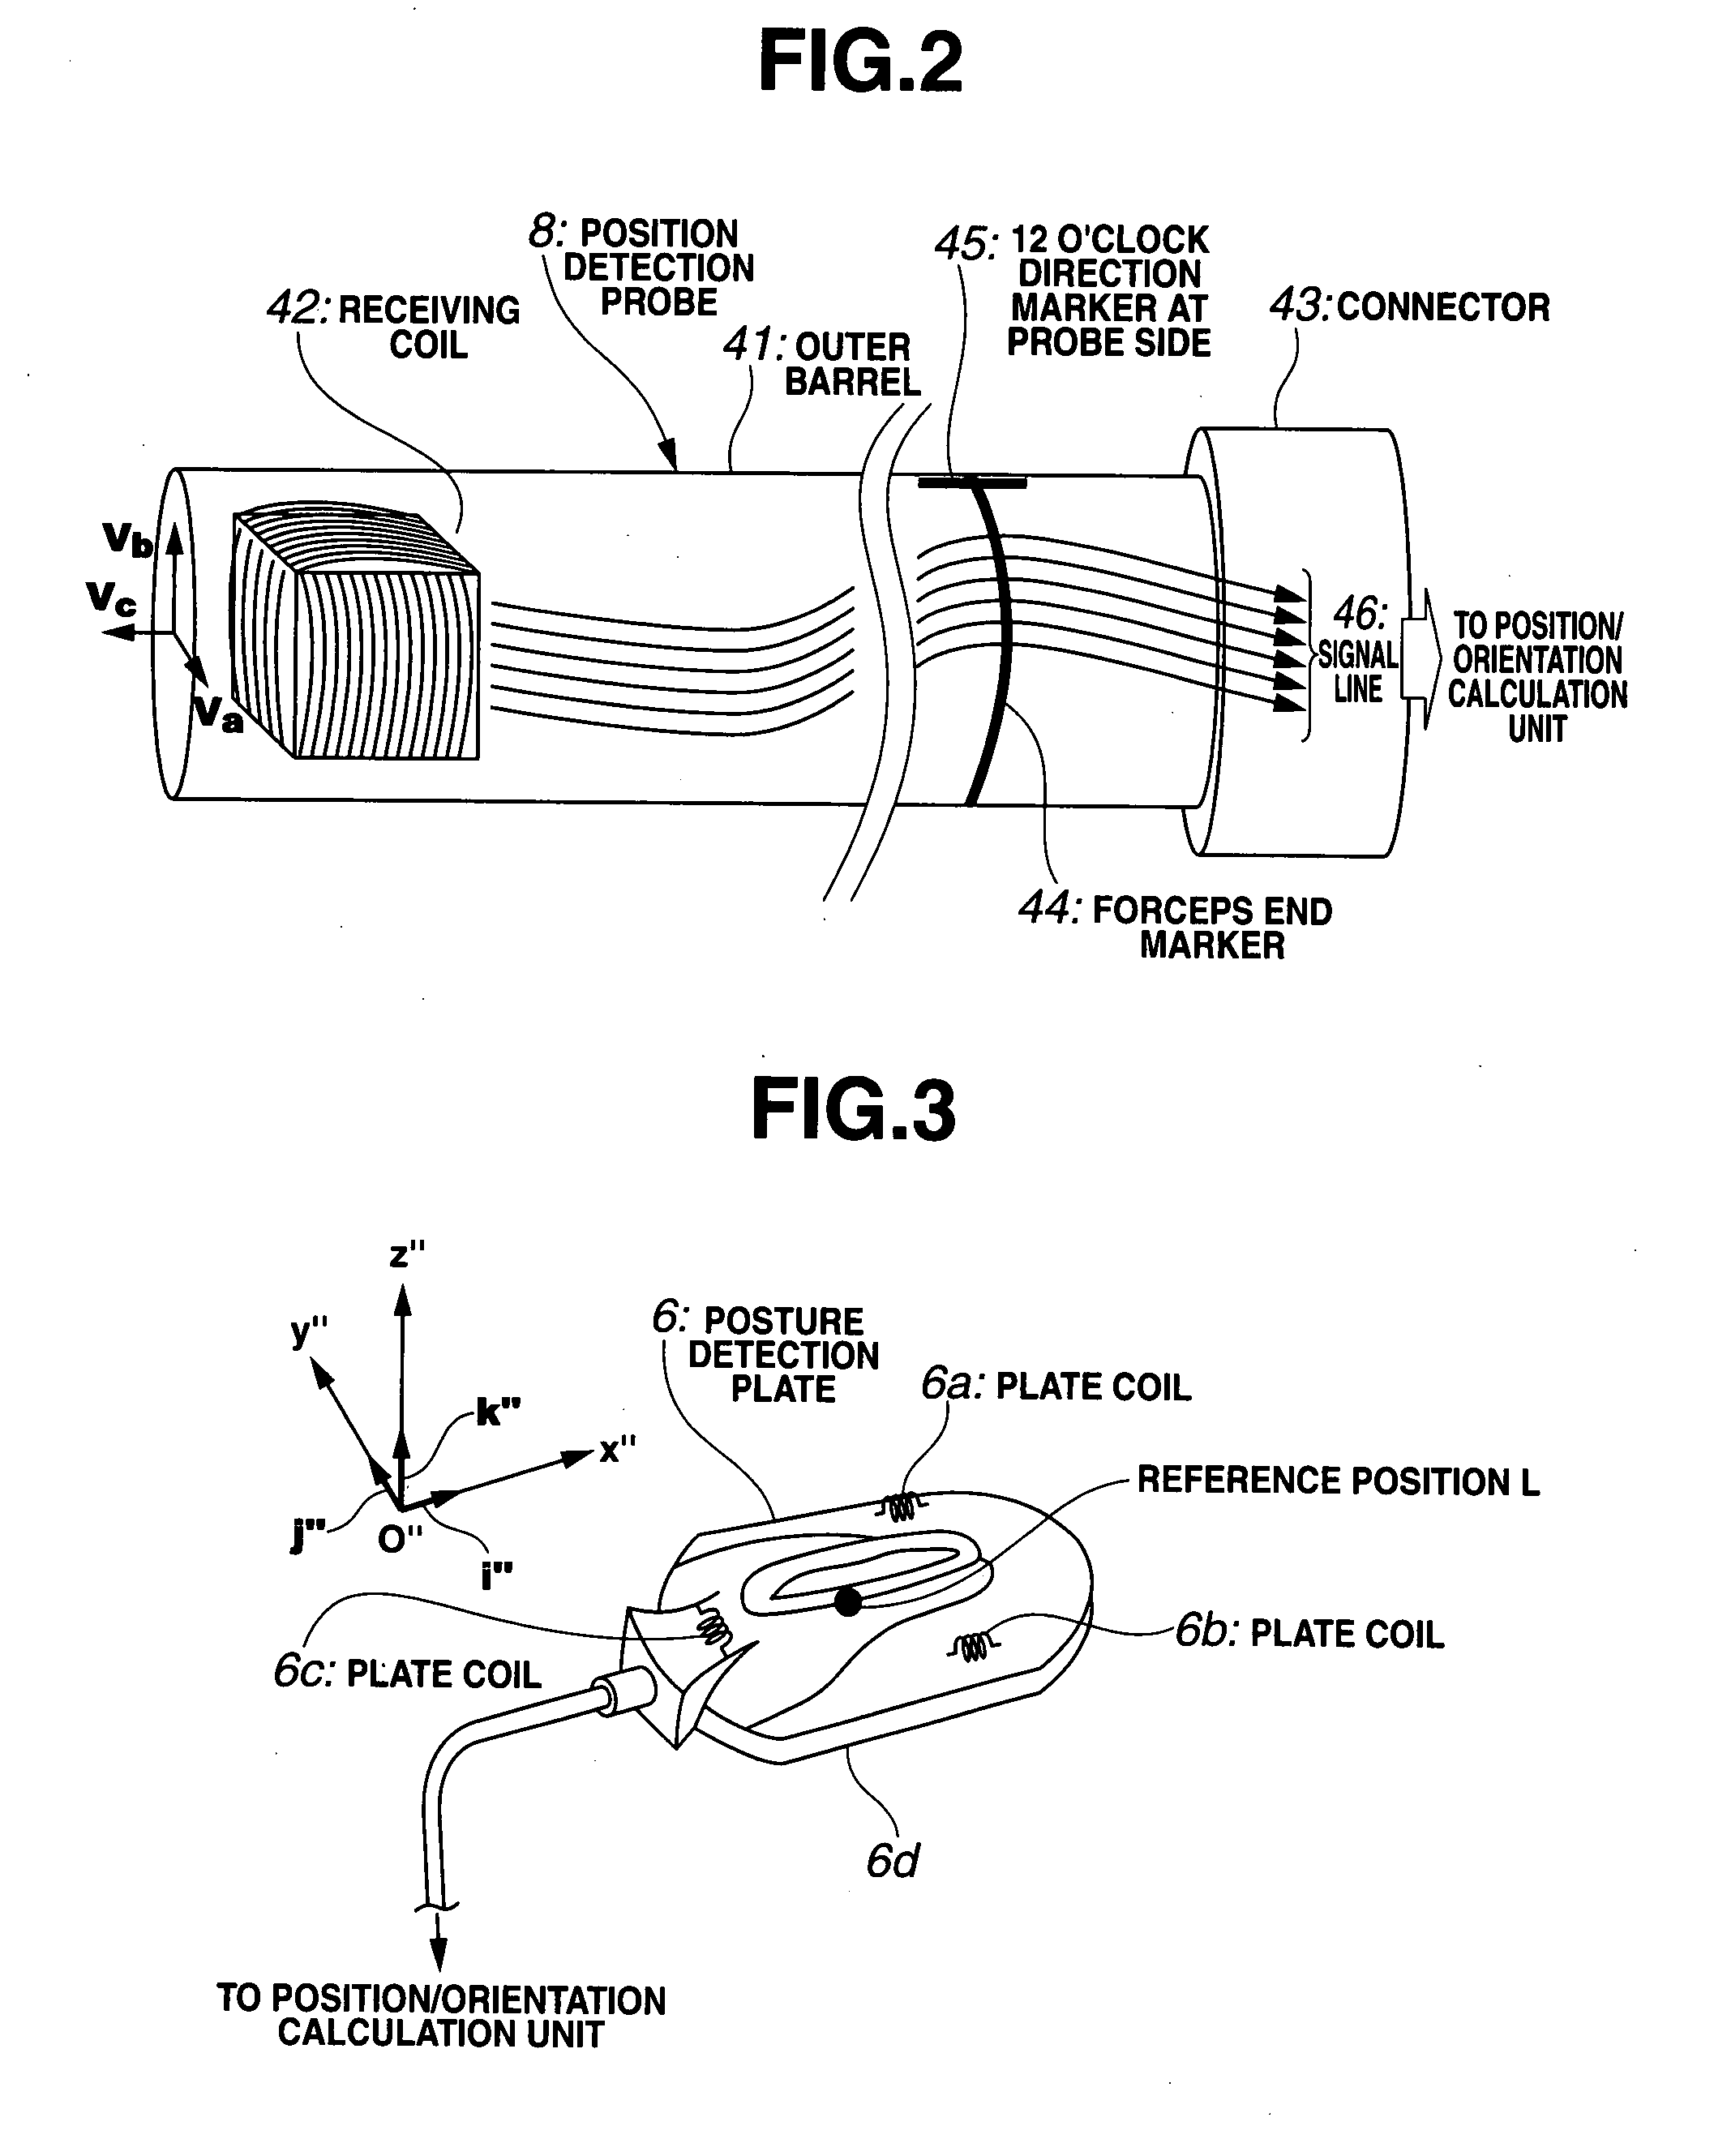 Ultrasonic diagnostic apparatus